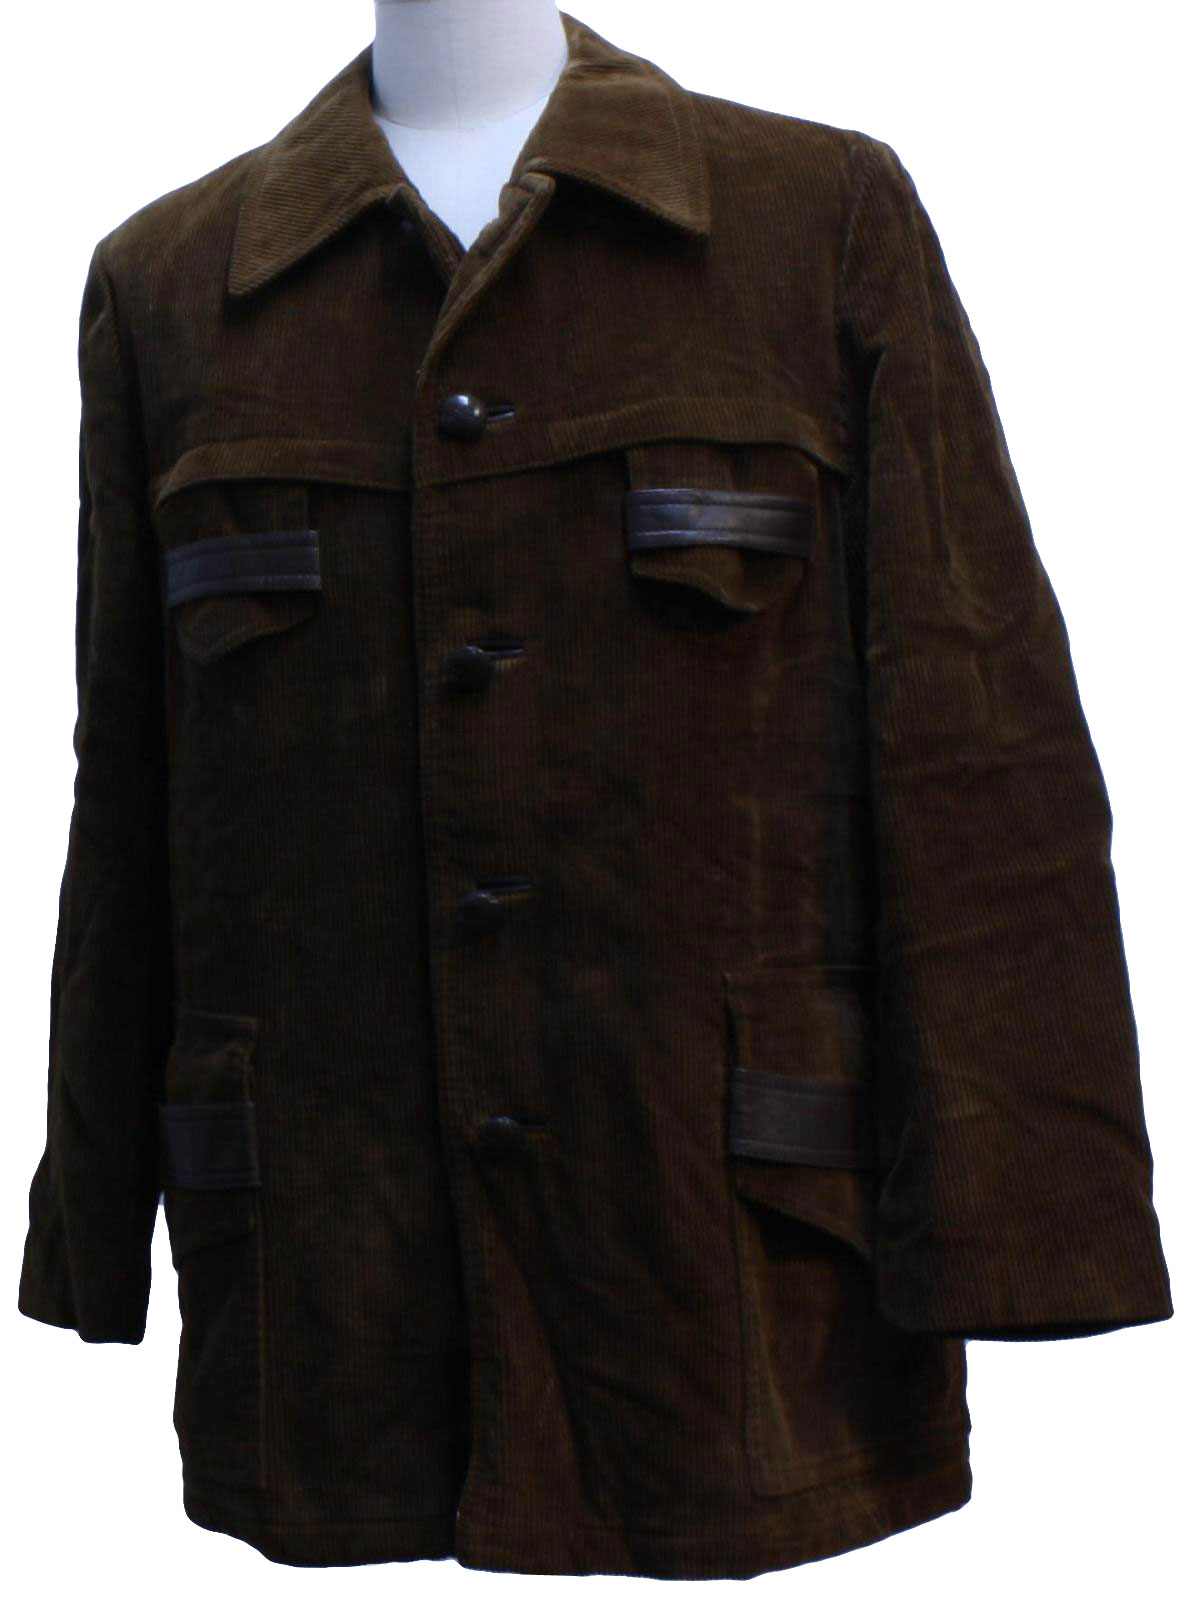 Retro 1970's Jacket (Peters) : 70s -Peters- mens brown cotton blend ...